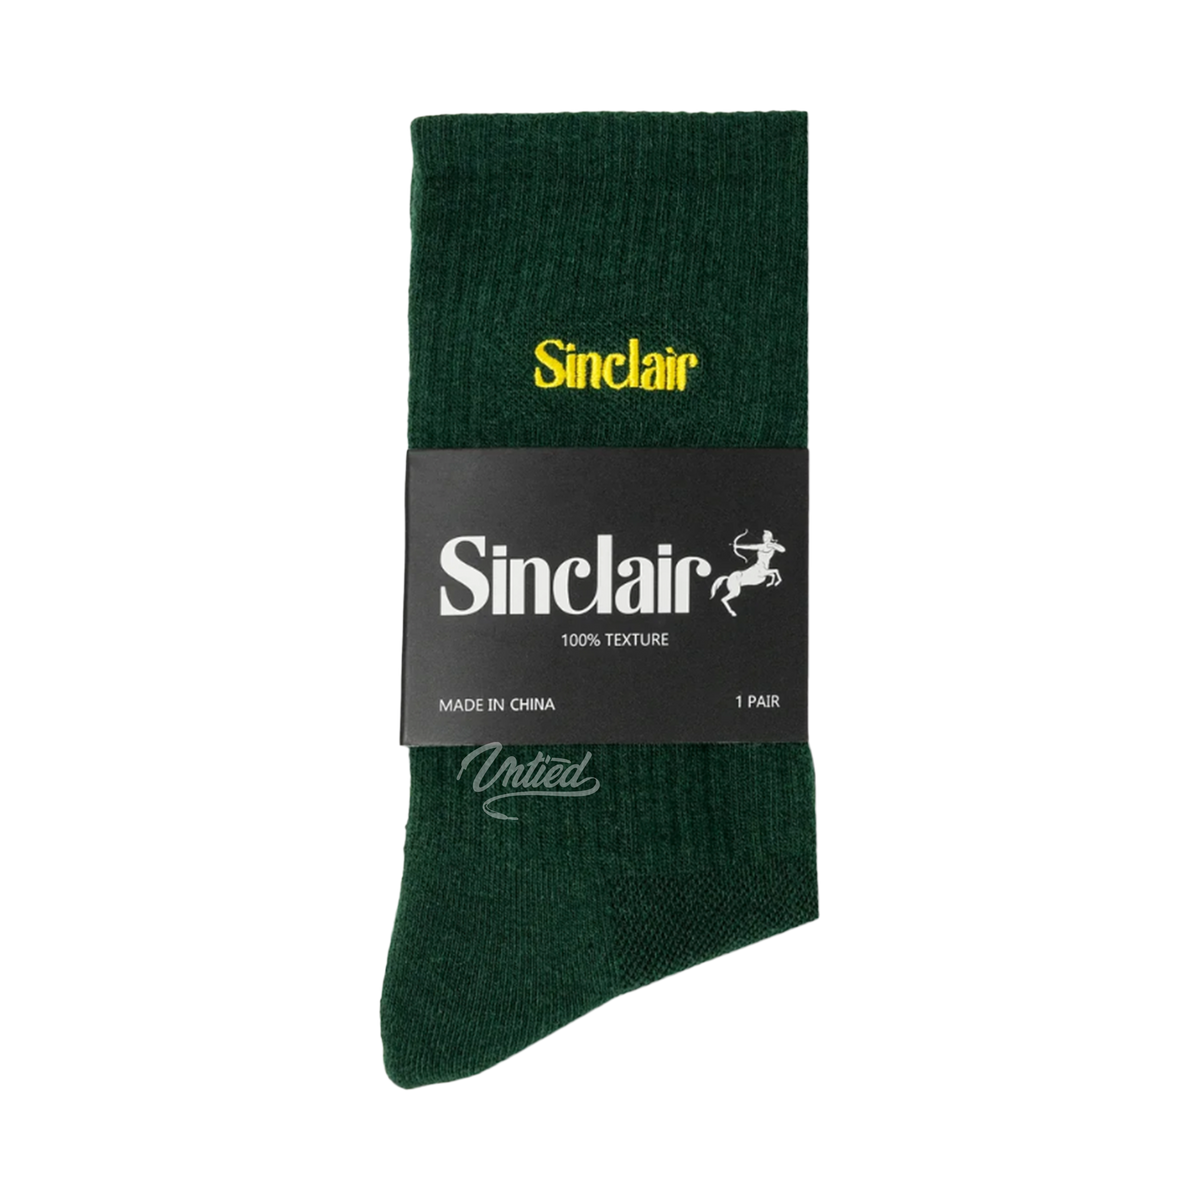 Sinclair Clairssential Socks "Green/Yellow"